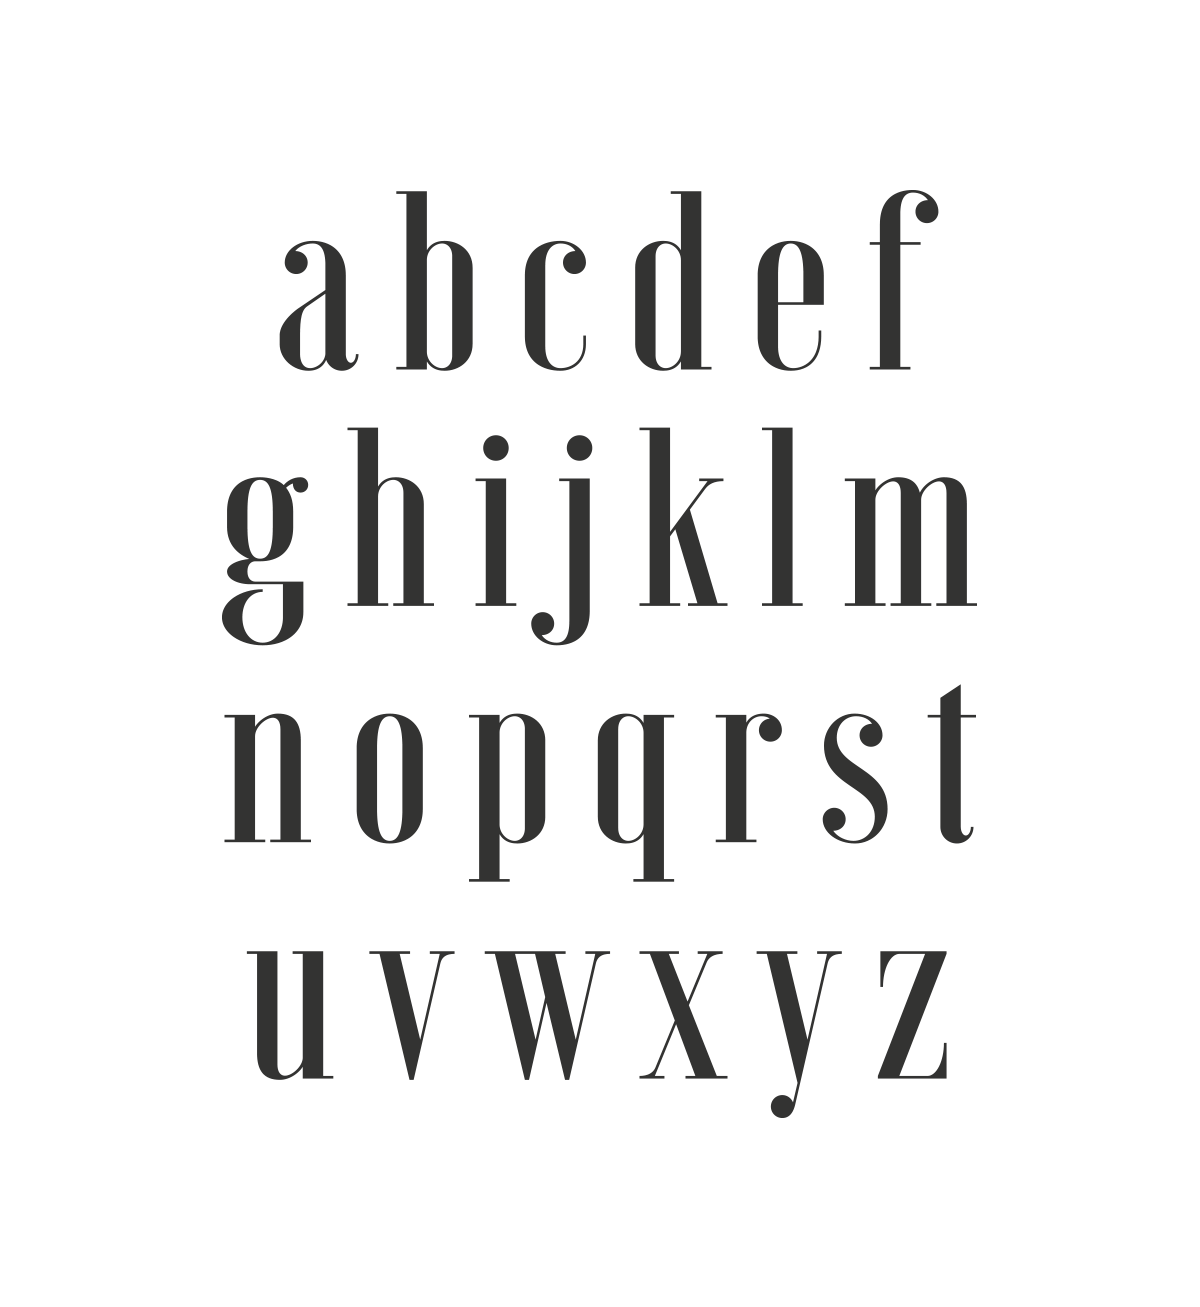 free font voga serif elegant classy Typeface condensed bold medium regular Display free type Opentype alternates